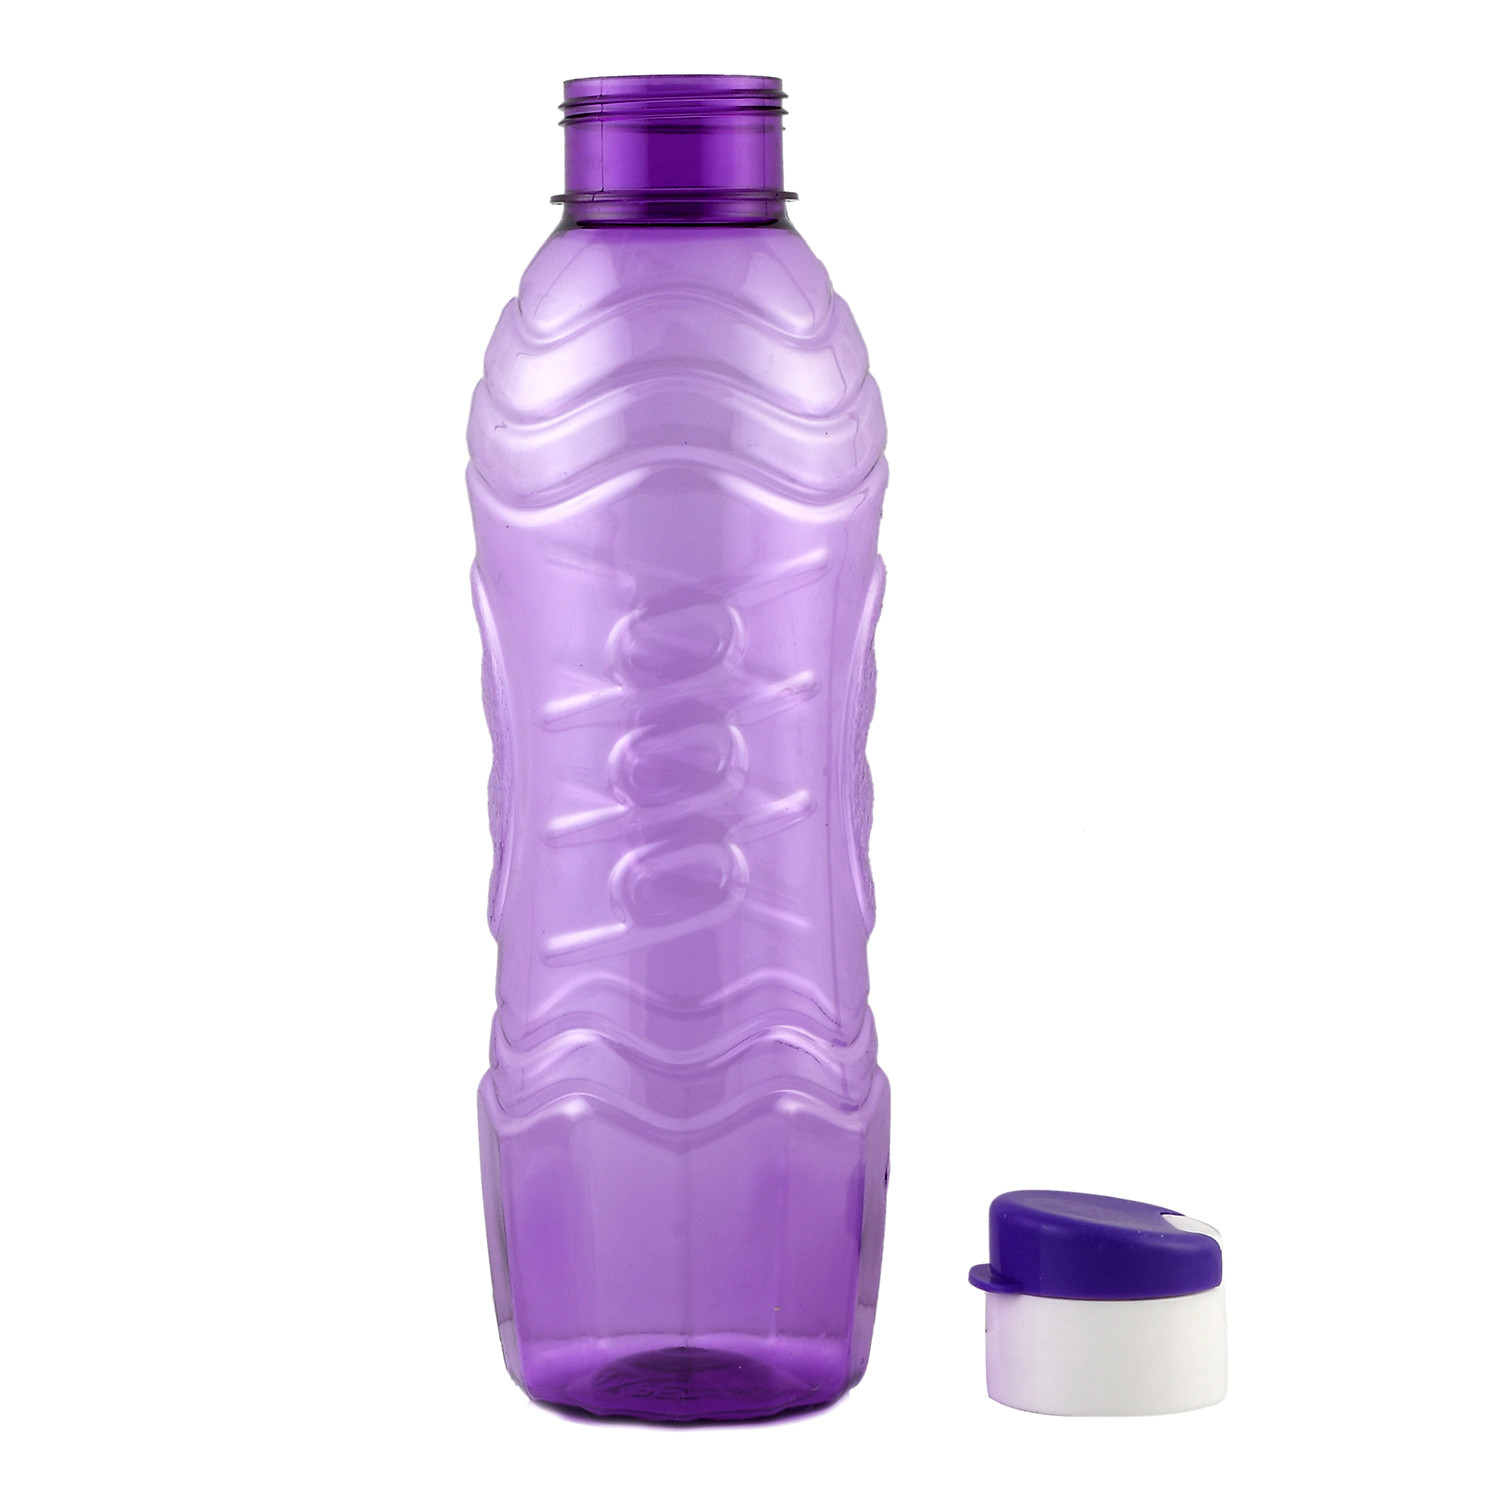 Kuber Industries Plastic Fridge Water Bottle Set with Flip Cap (1000ml, Green & Sky Blue & Purple)-KUBMART1546